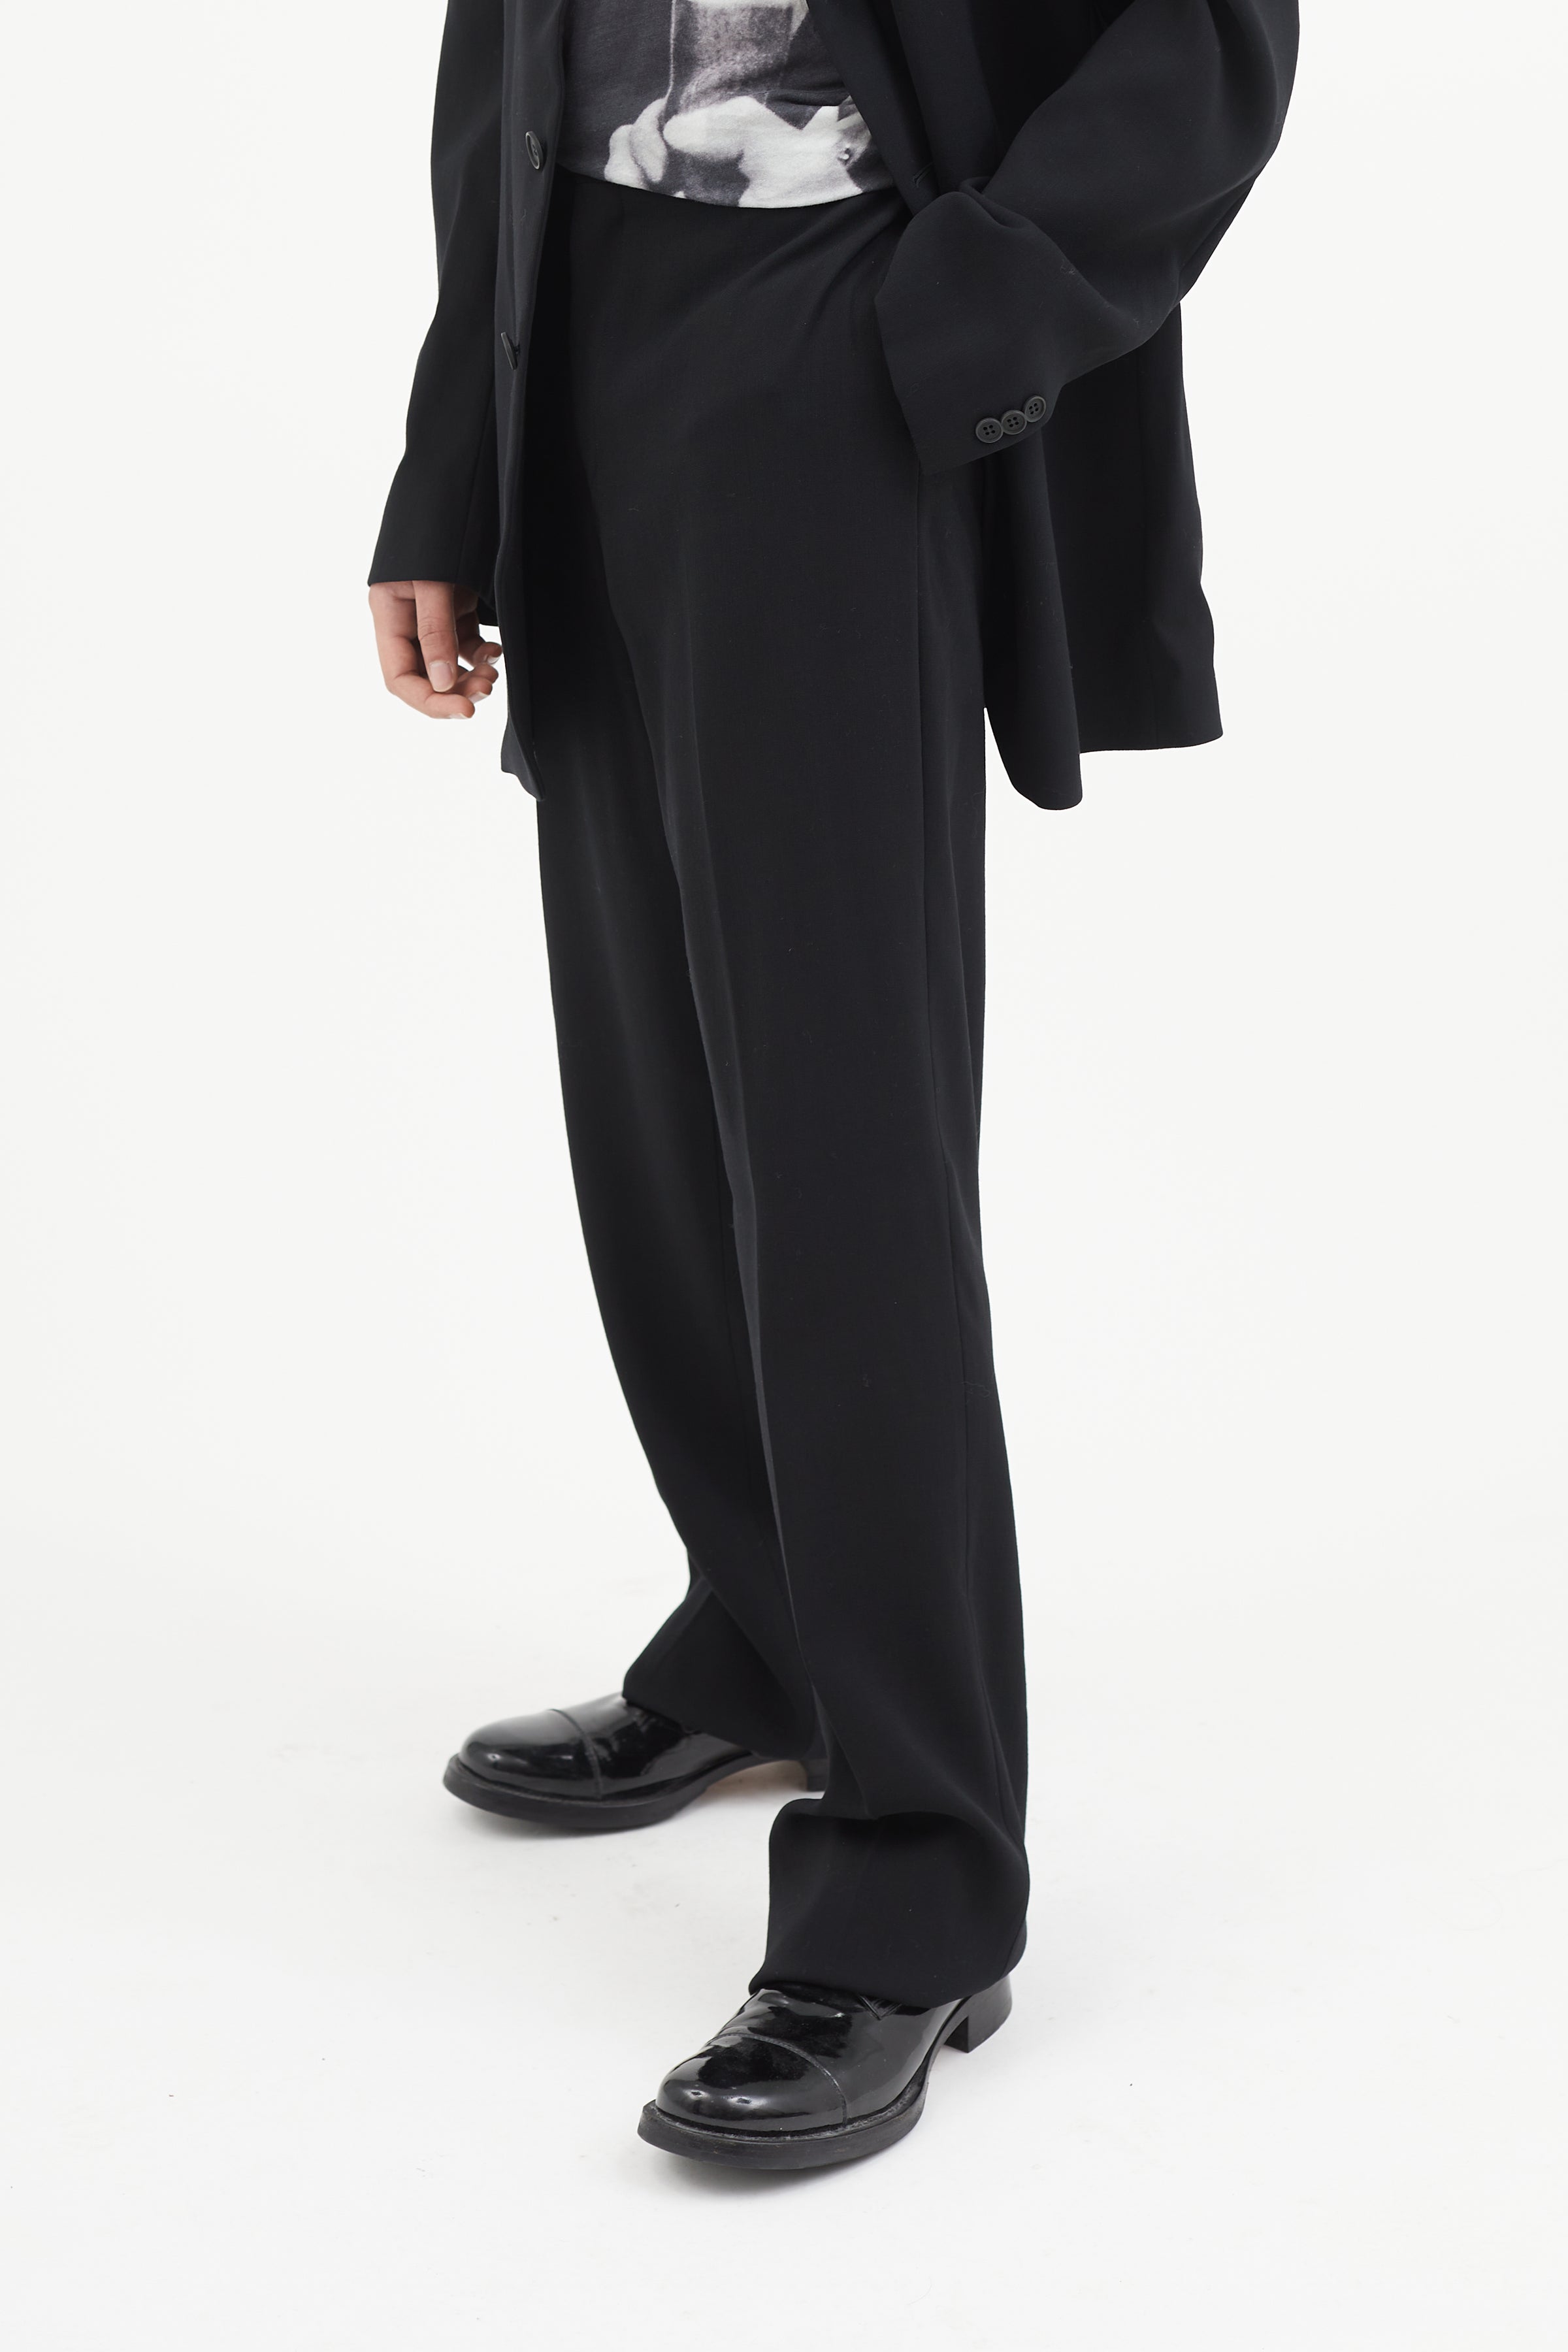 Emporio Armani  MLine 2 Piece Woven Suit in Navy  Nigel Clare